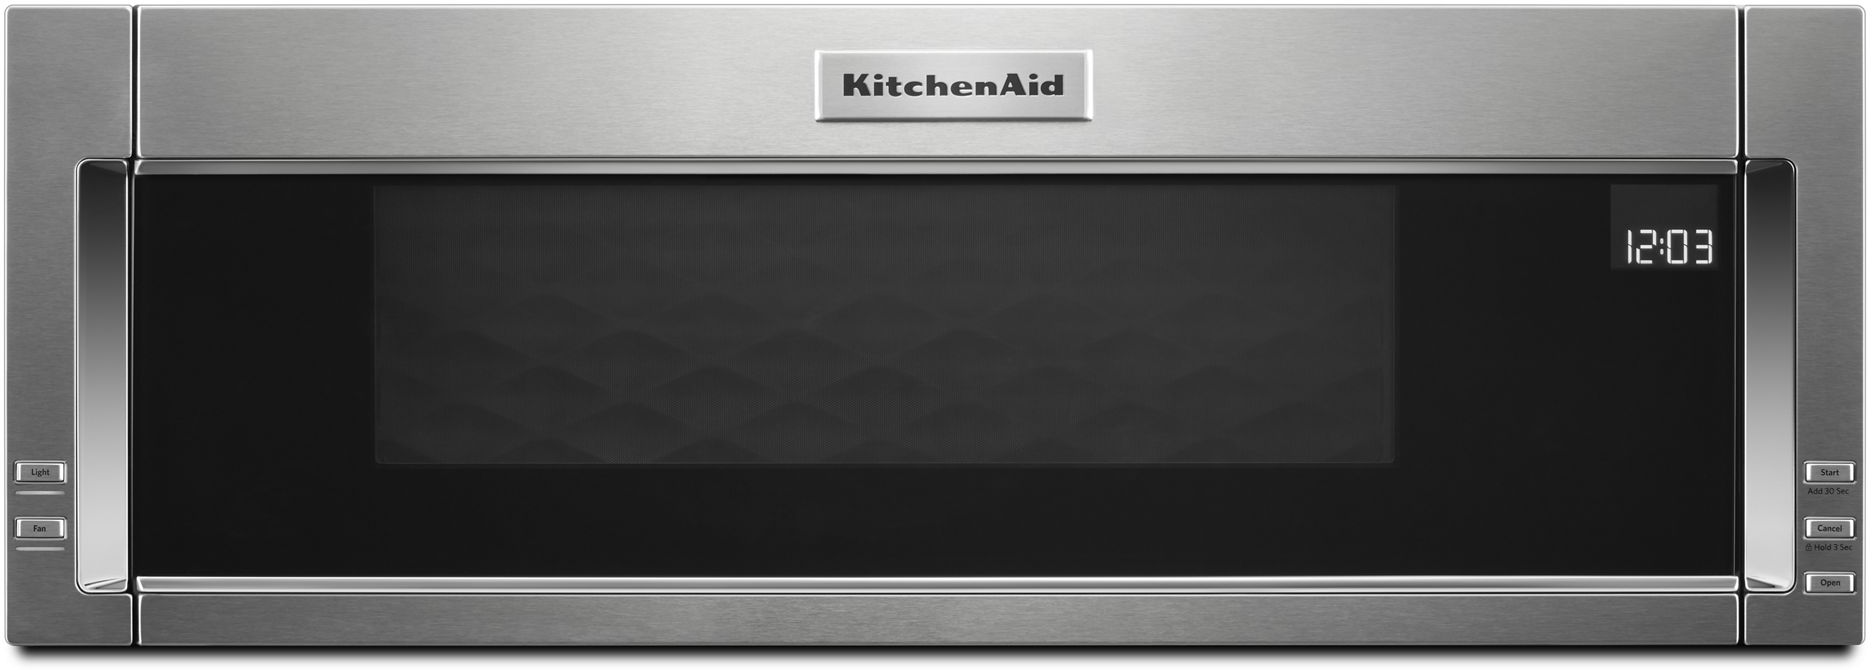 KitchenAid 1.1 Cu. Ft. Over-The-Range Microwave KMLS311HSS